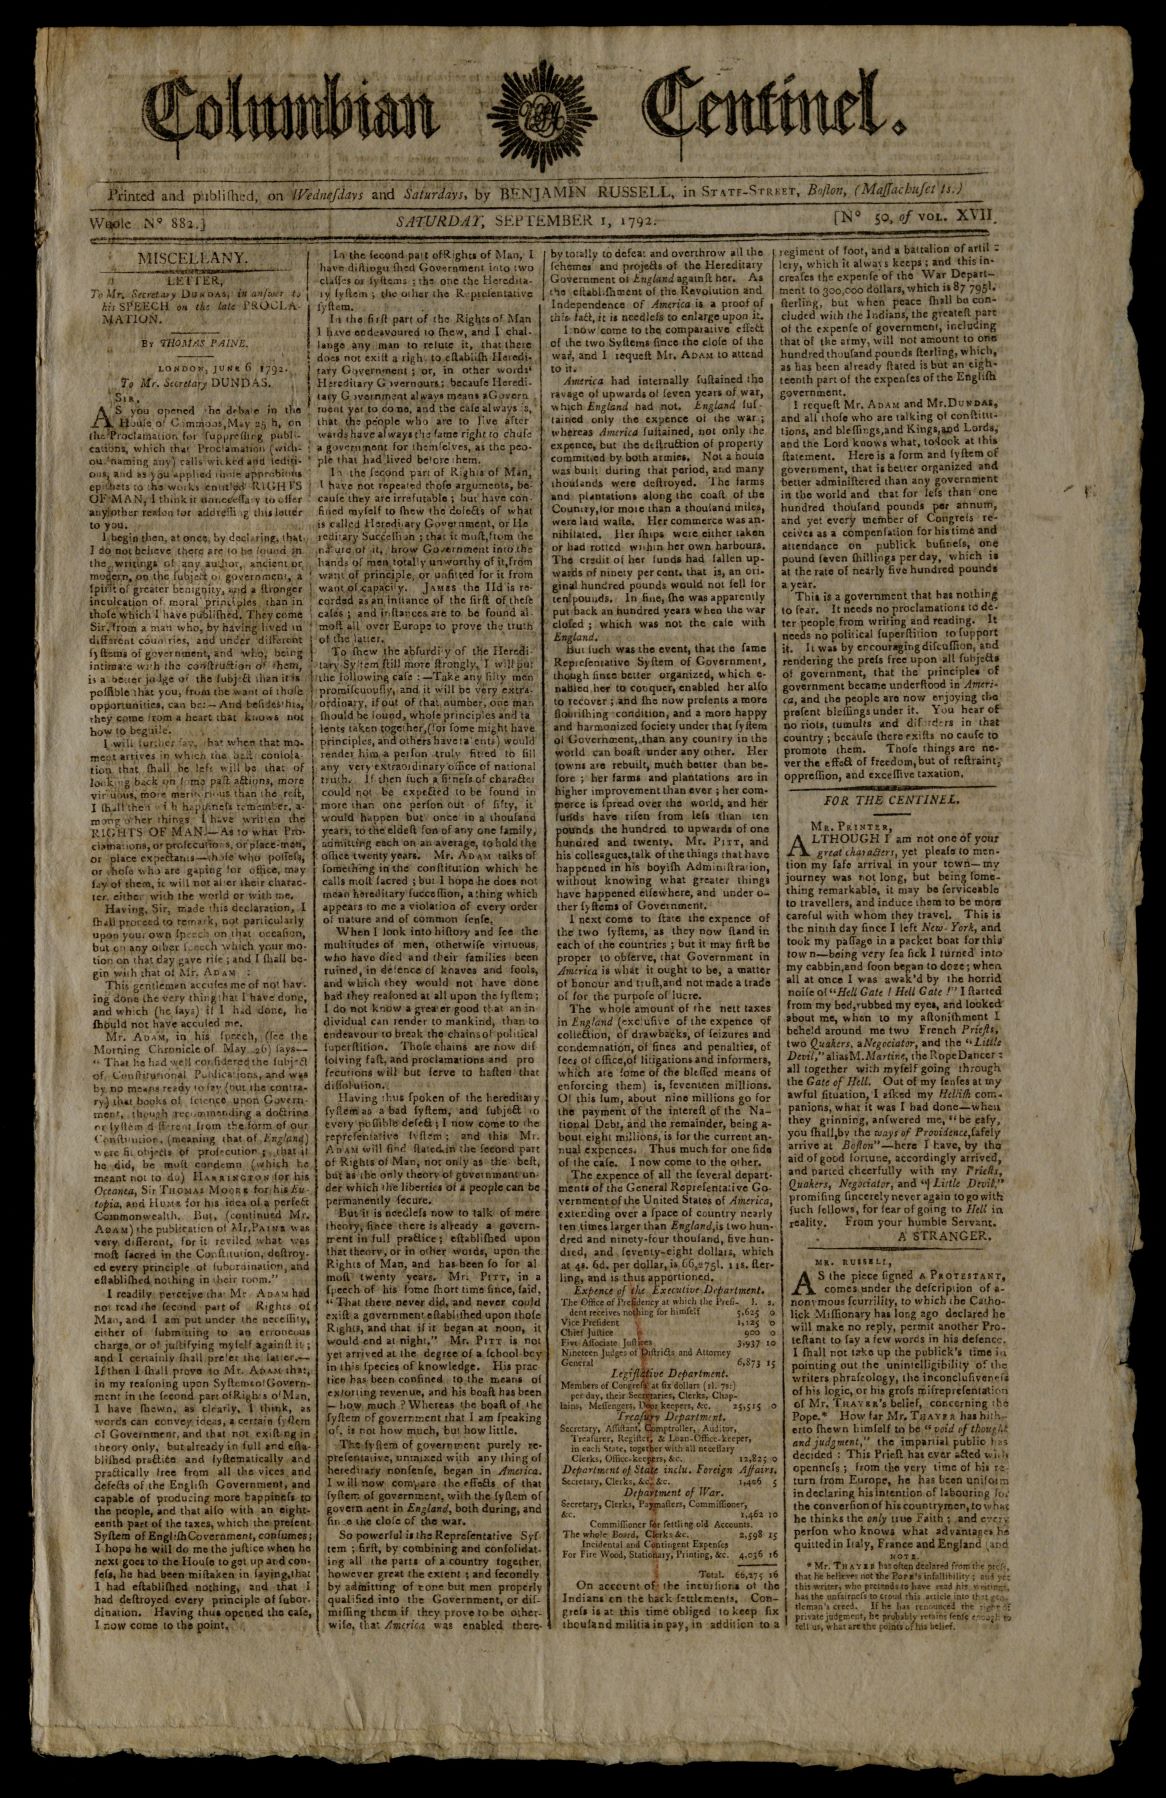 The Columbian Centinel, September 1, 1792 (The Gilder Lehrman Institute, GLC00281)